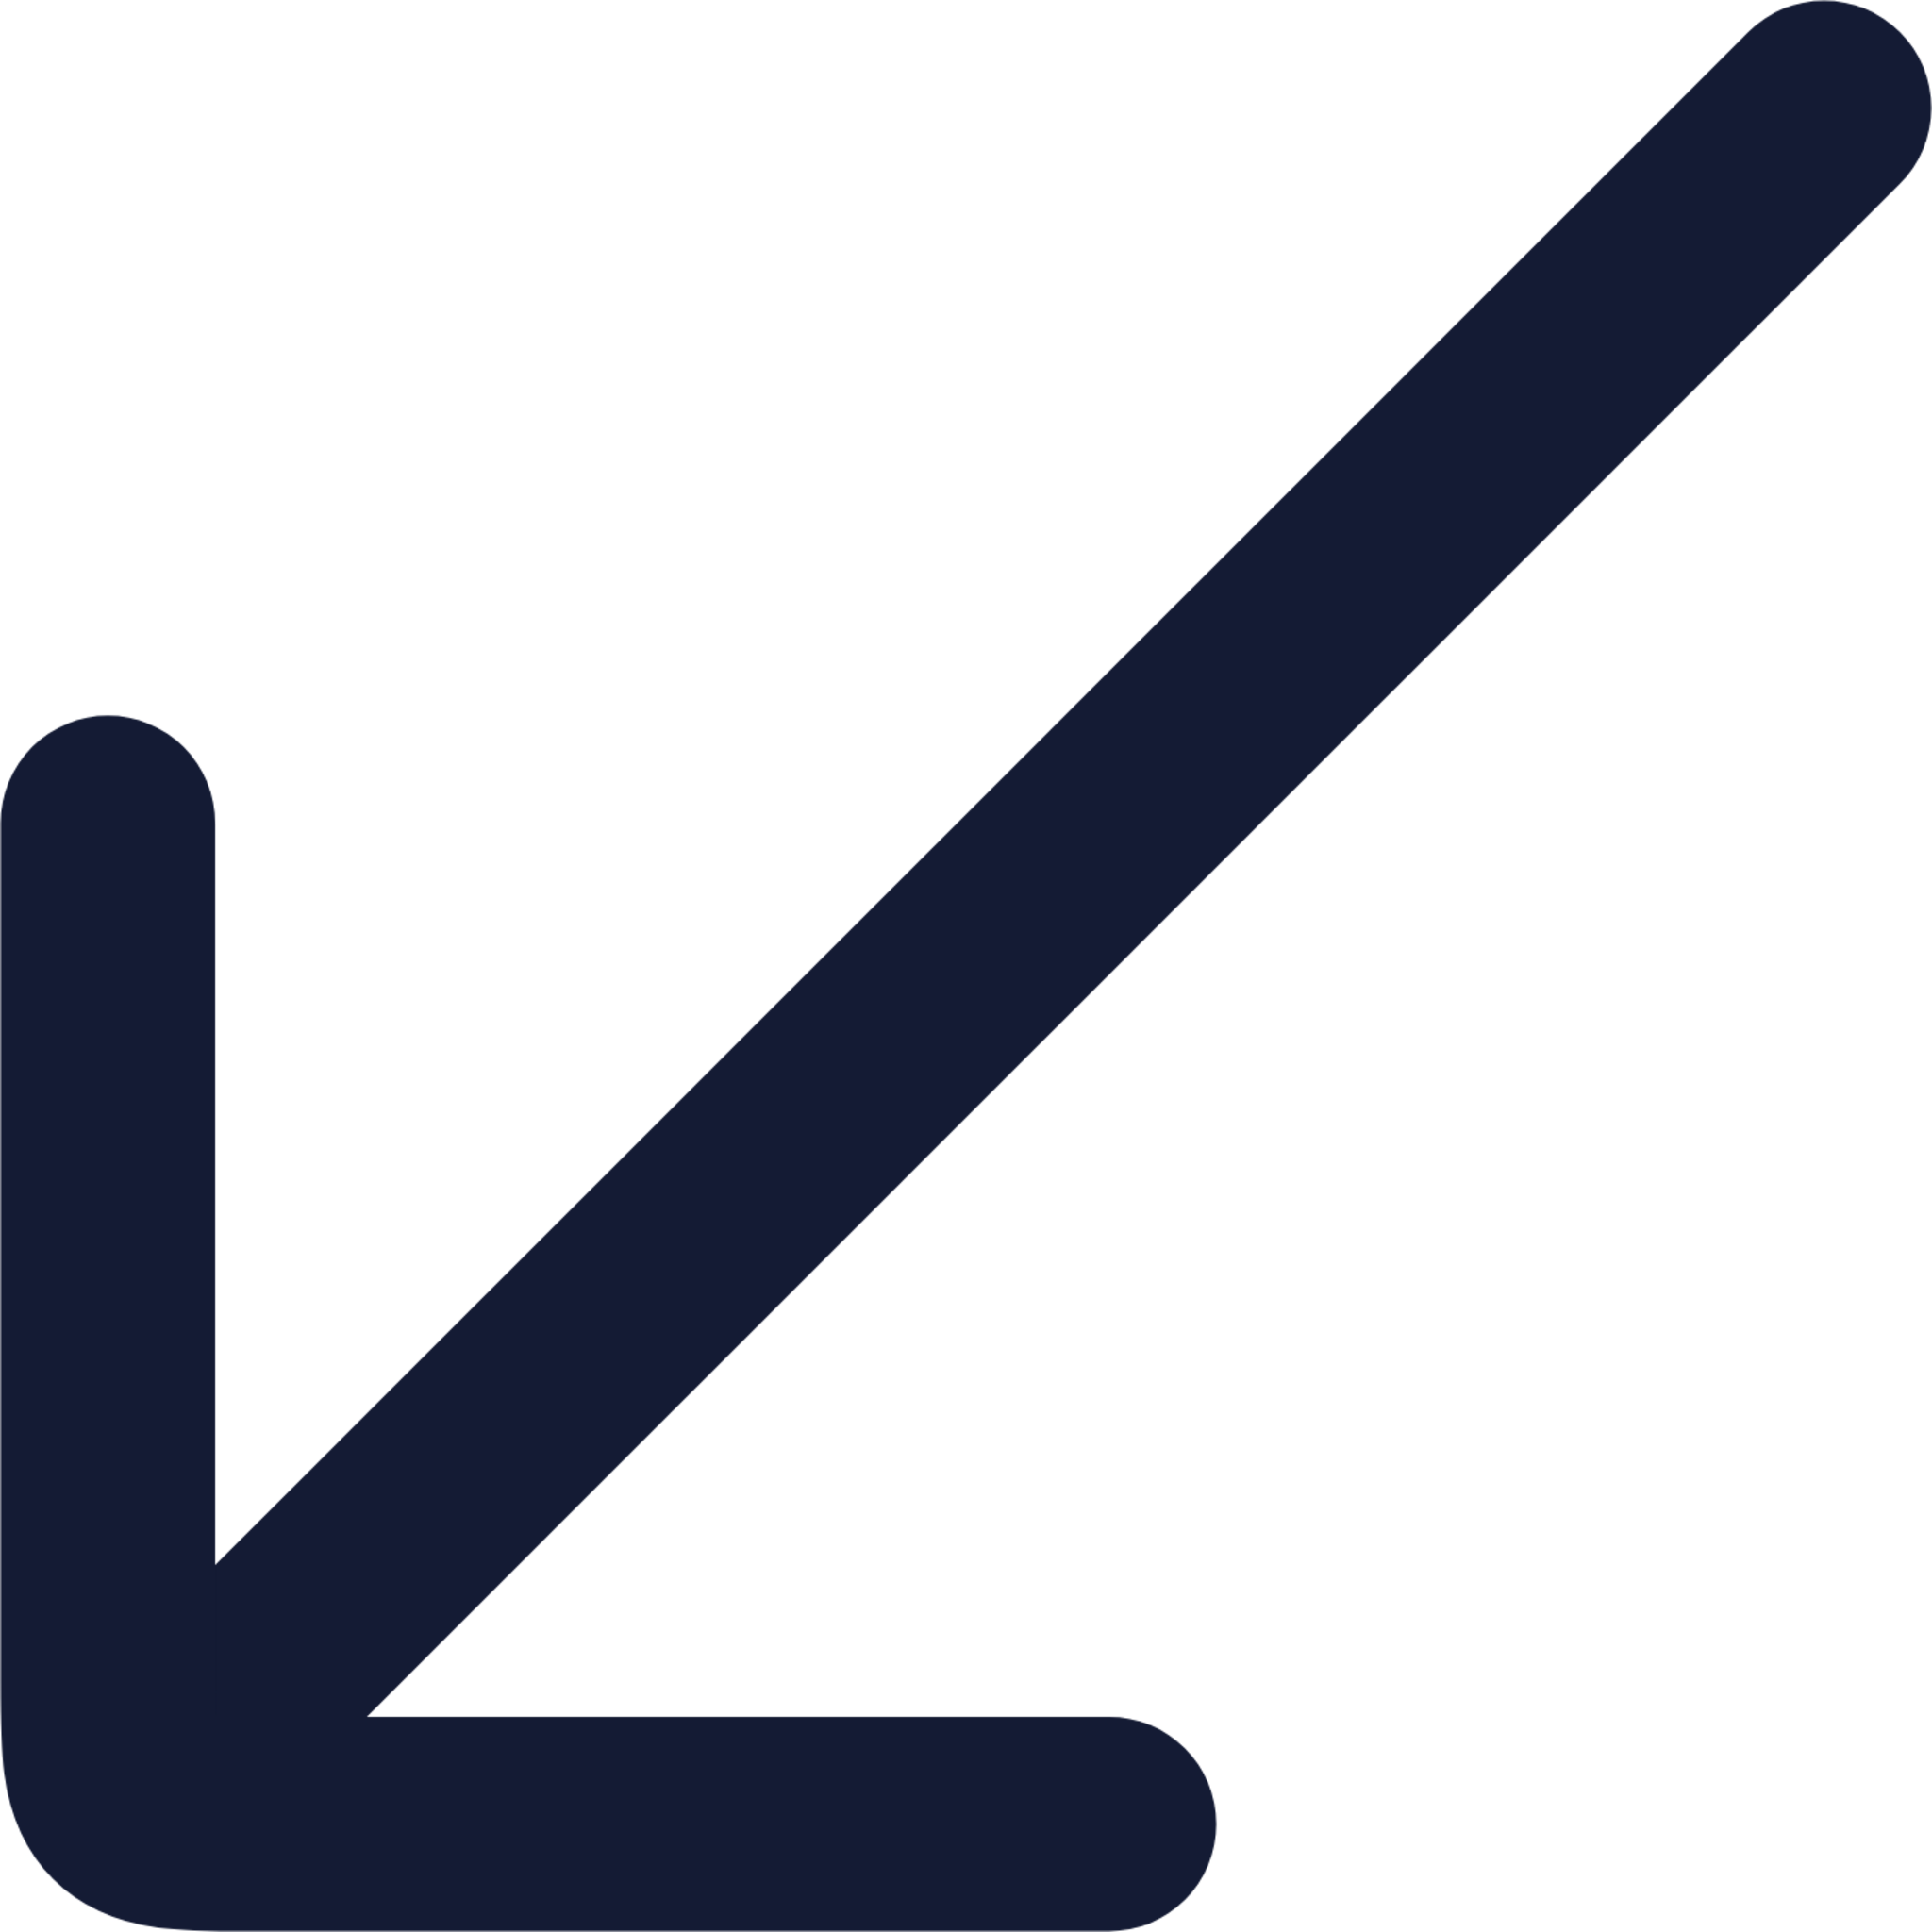 arrow down left icon